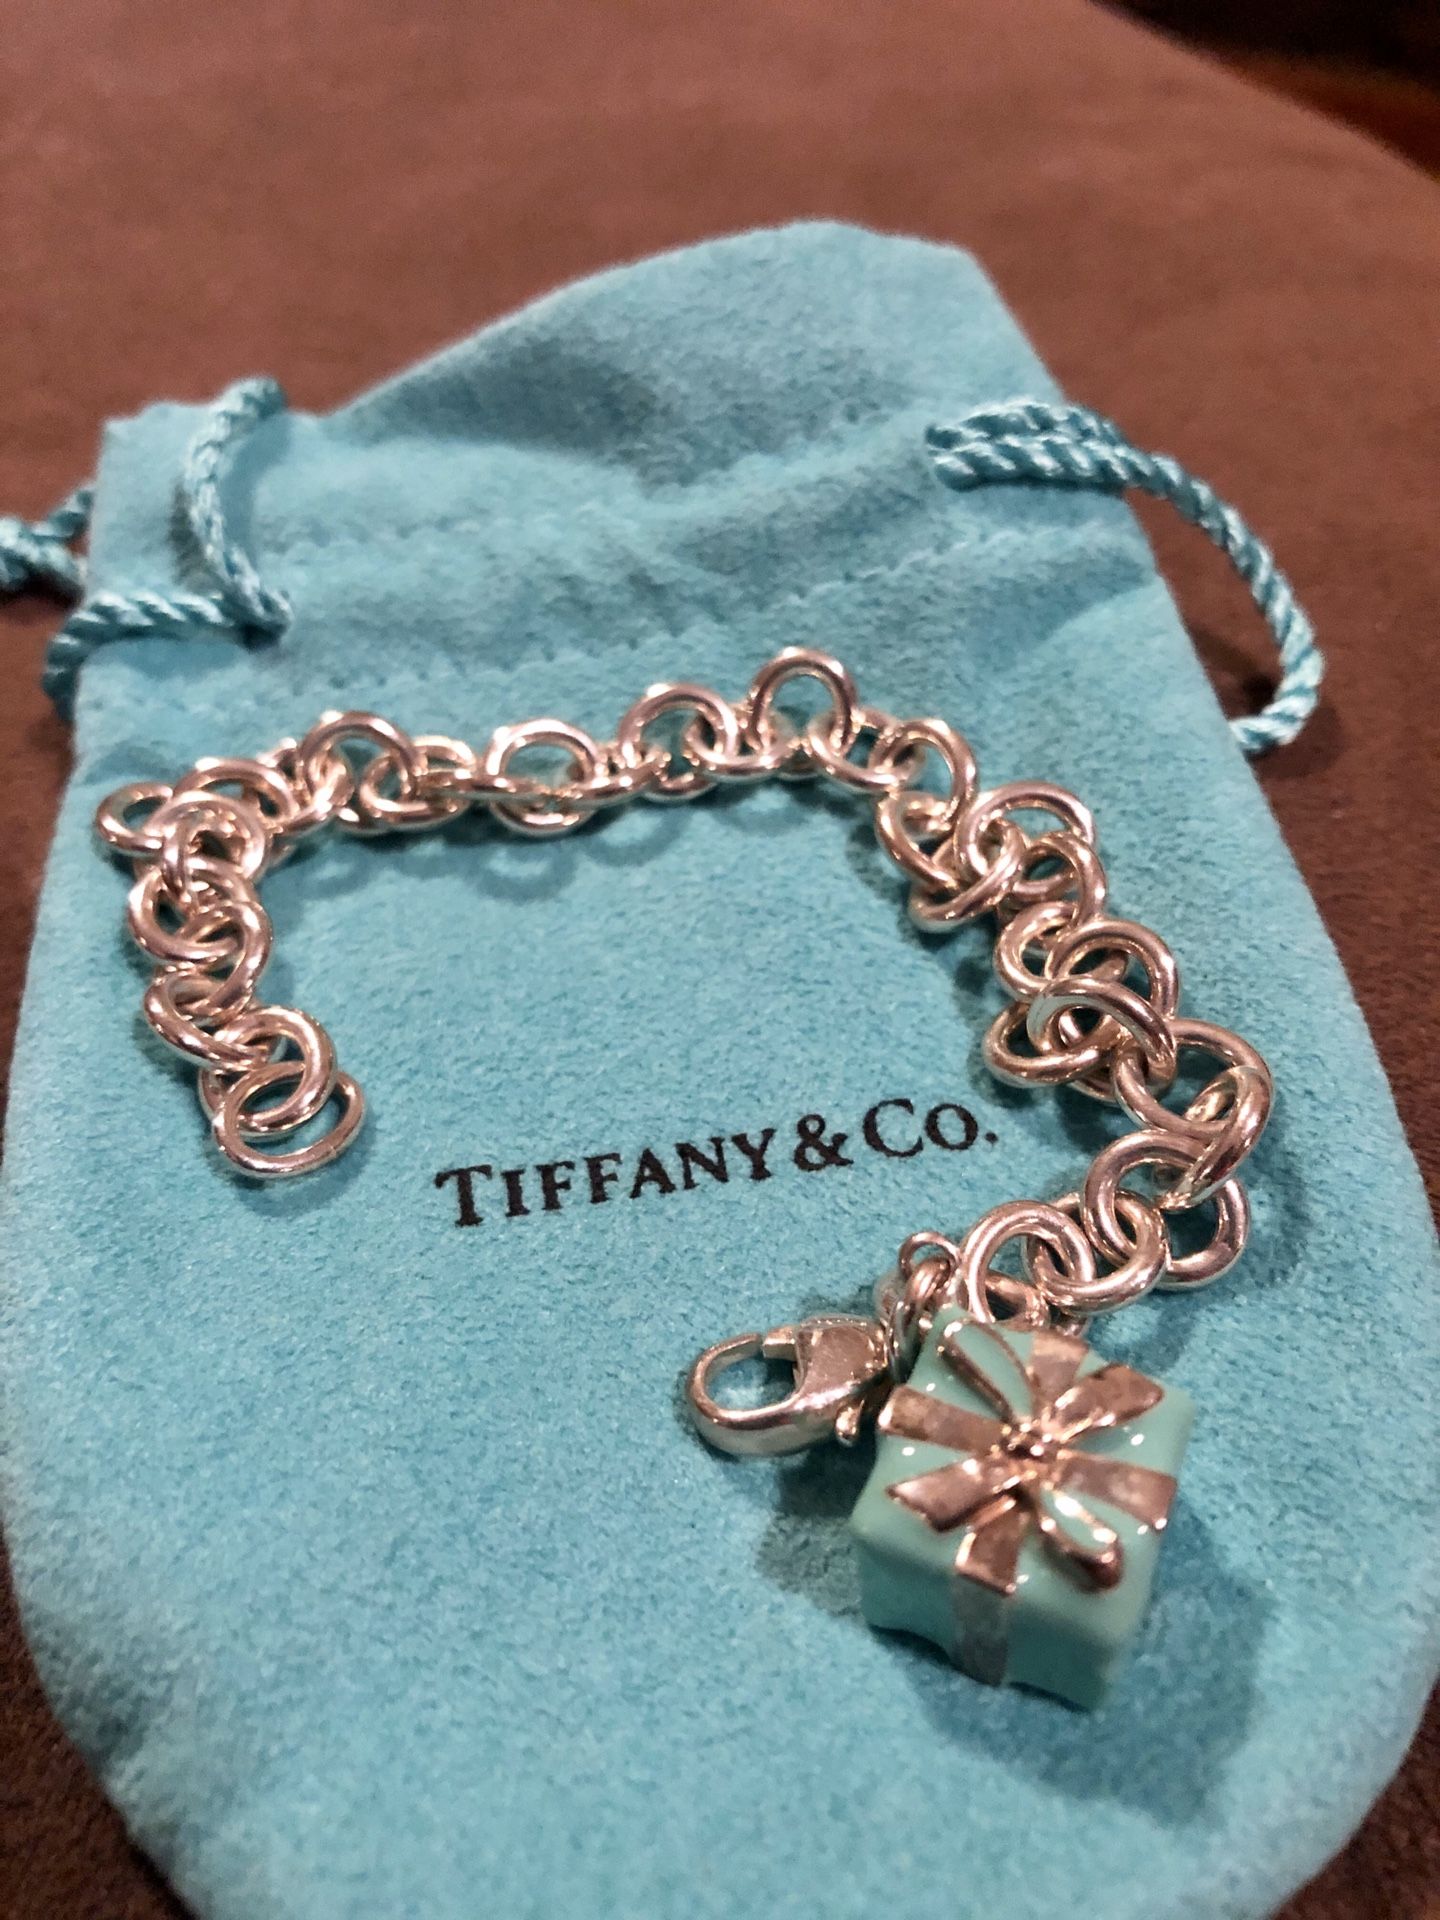 Tiffany & Co Charm Bracelet - Like New!